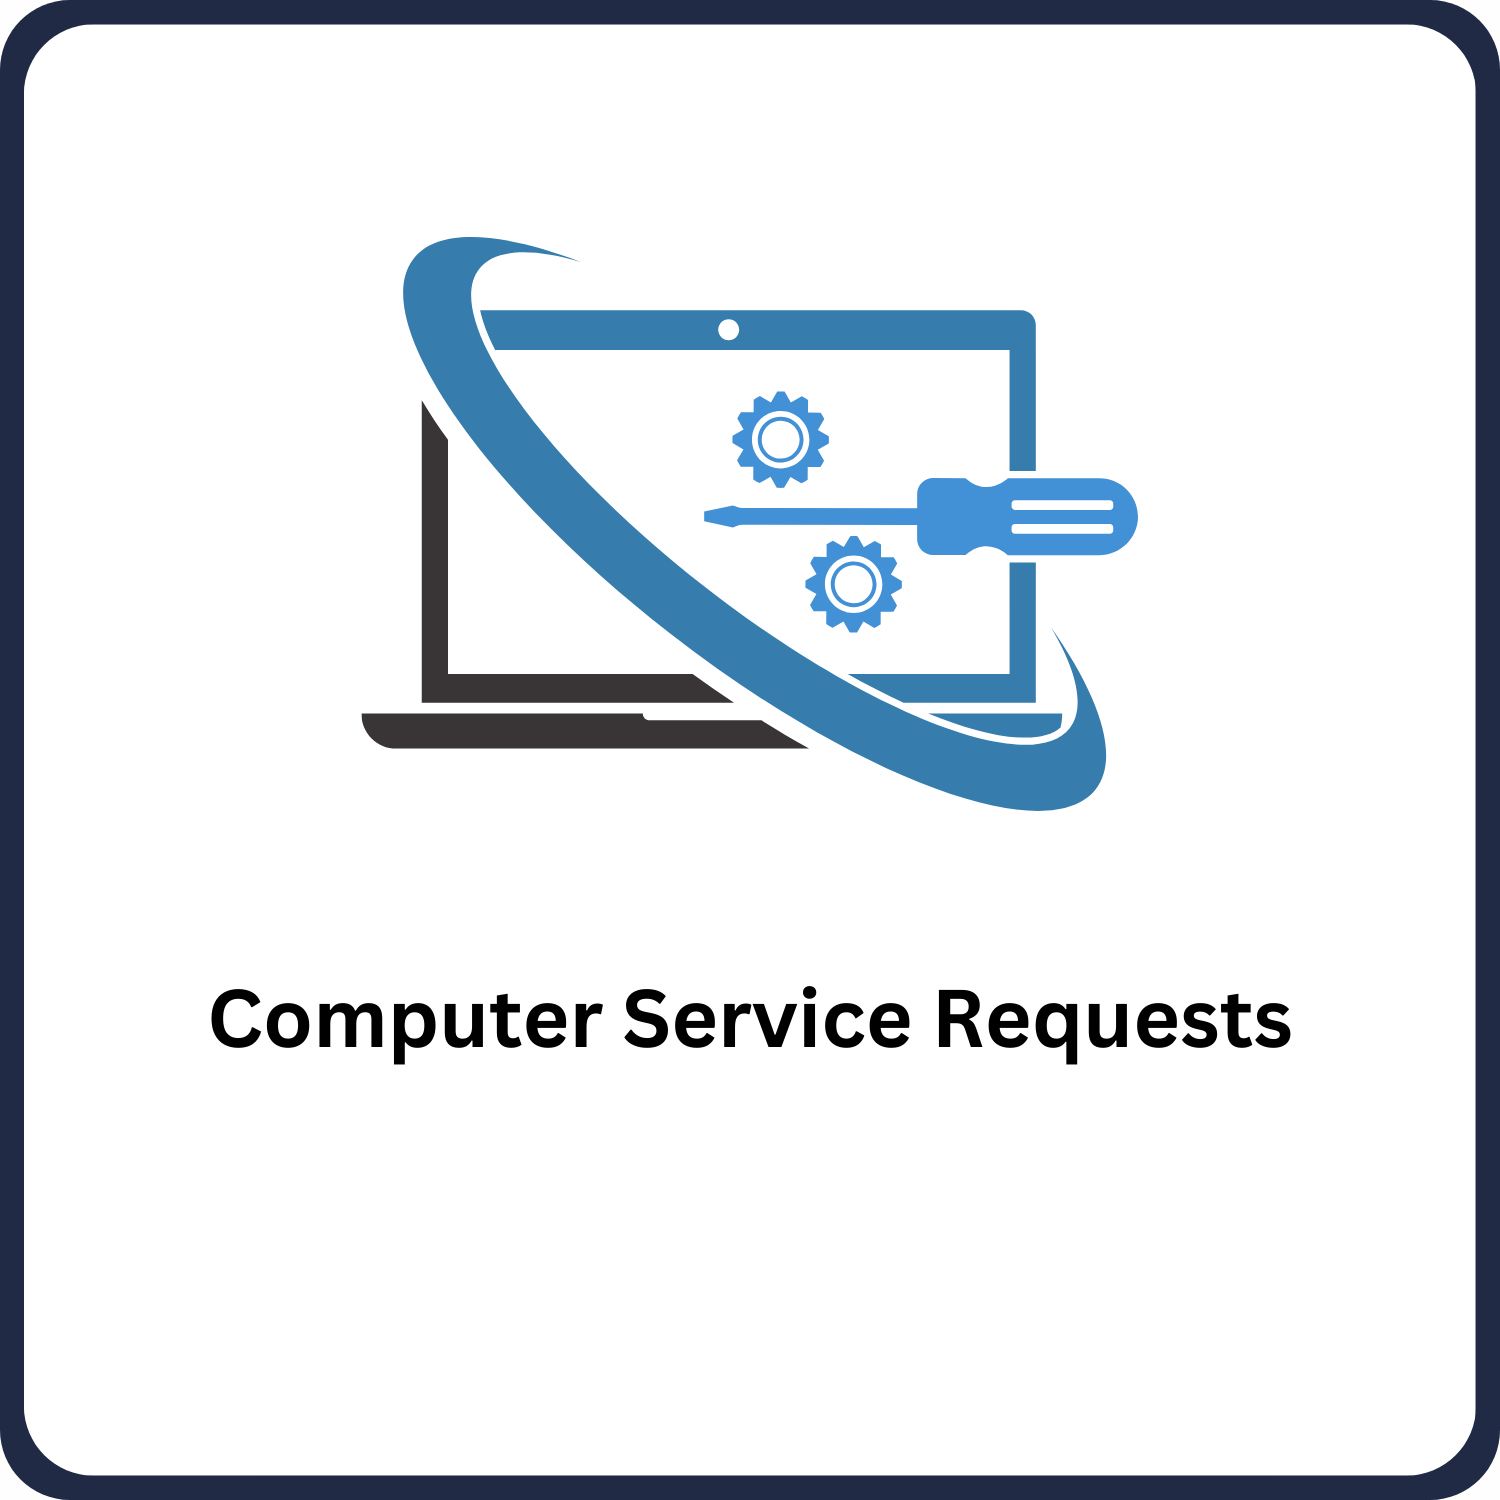 Computer Service Requests